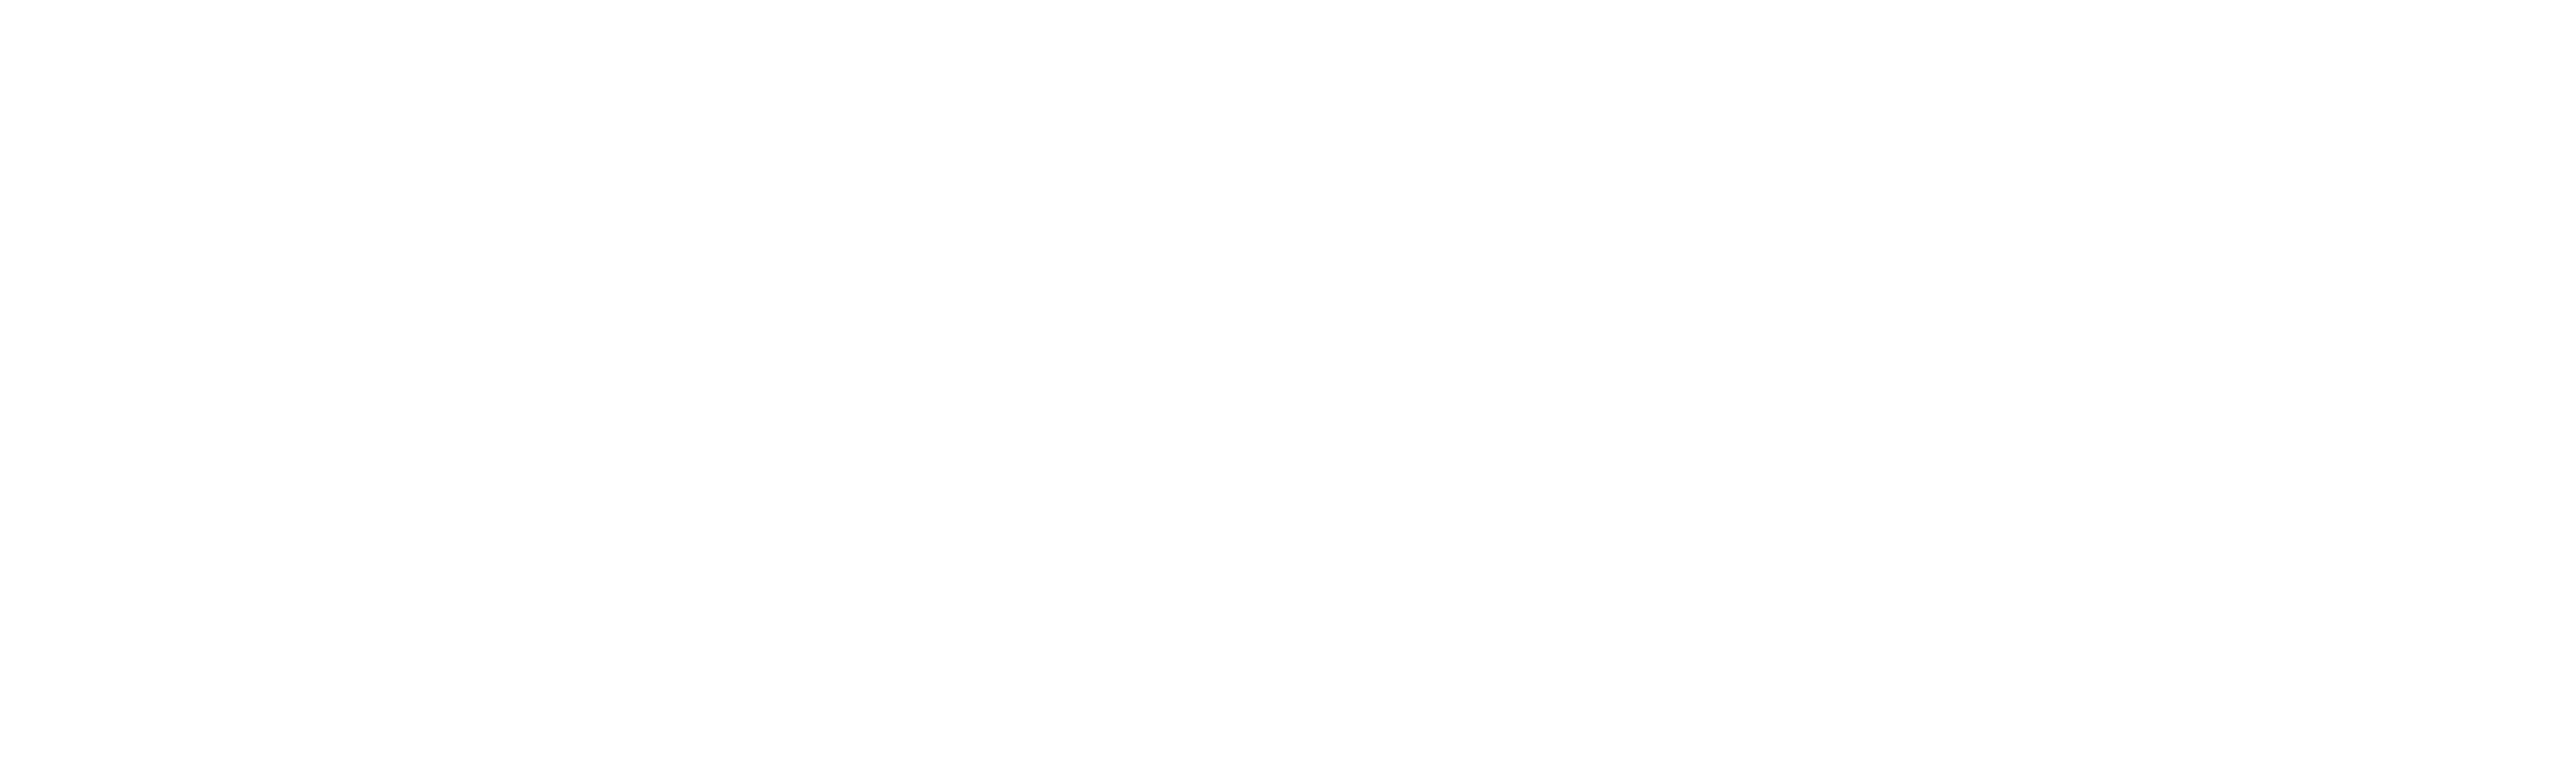 Your-journey-begins-here